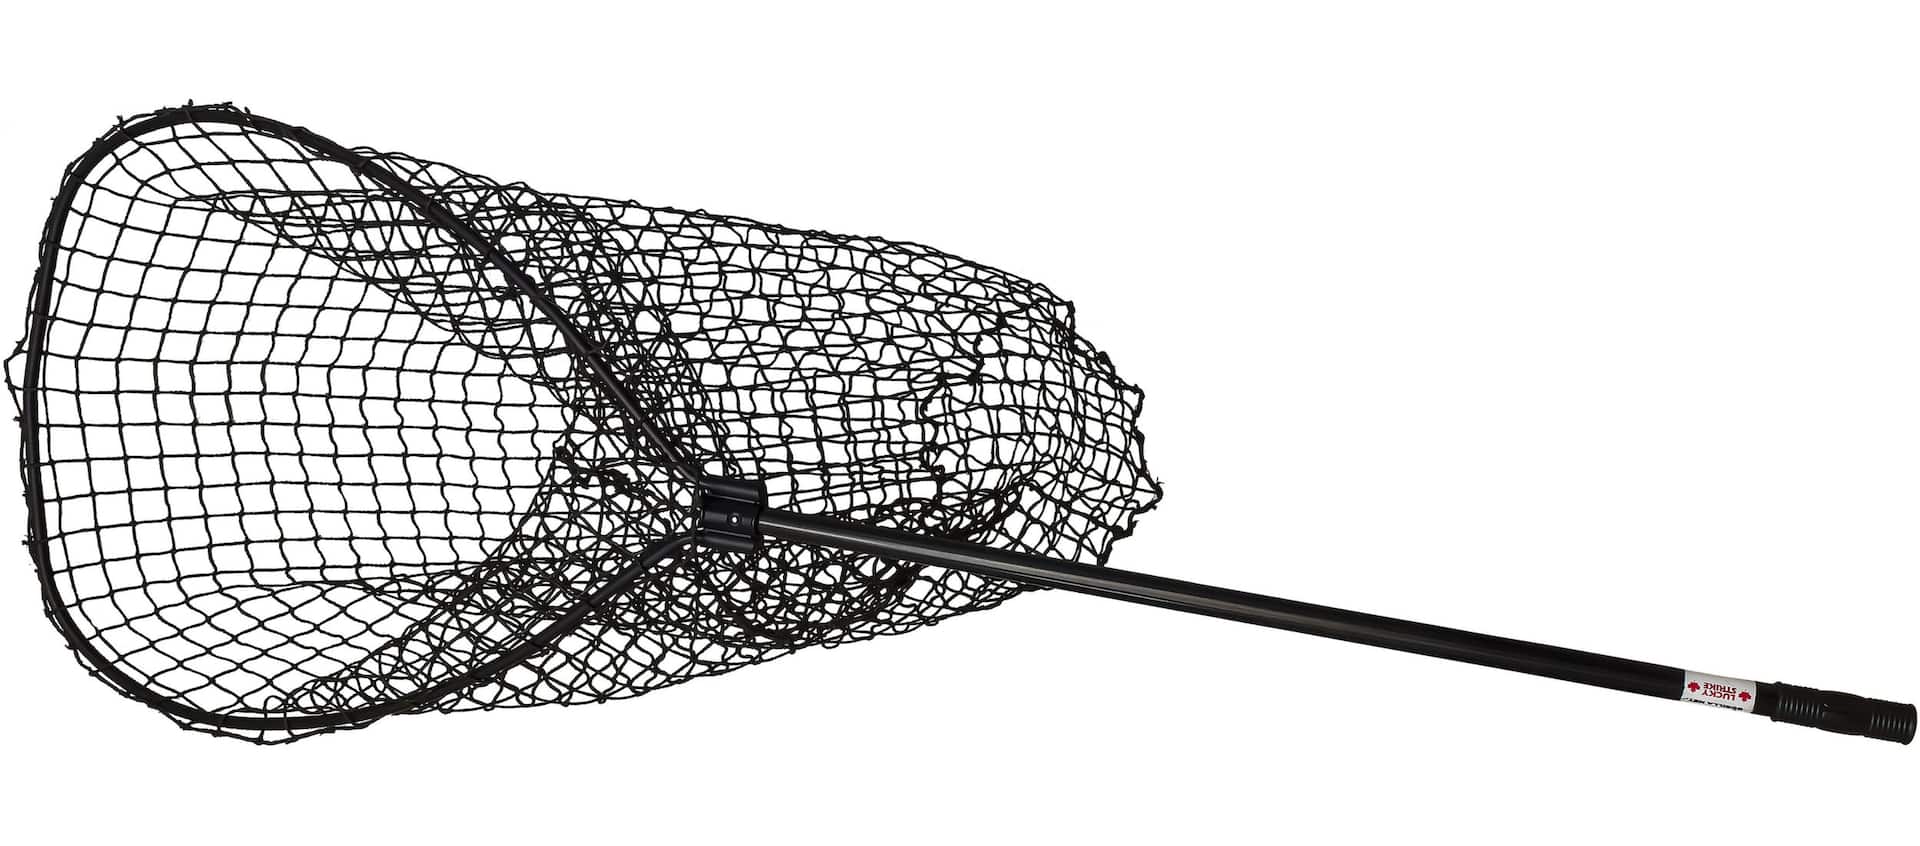 King salmon fishing net 7 7/8 inch 30 mesh 630ft Mono / Premium fishing net